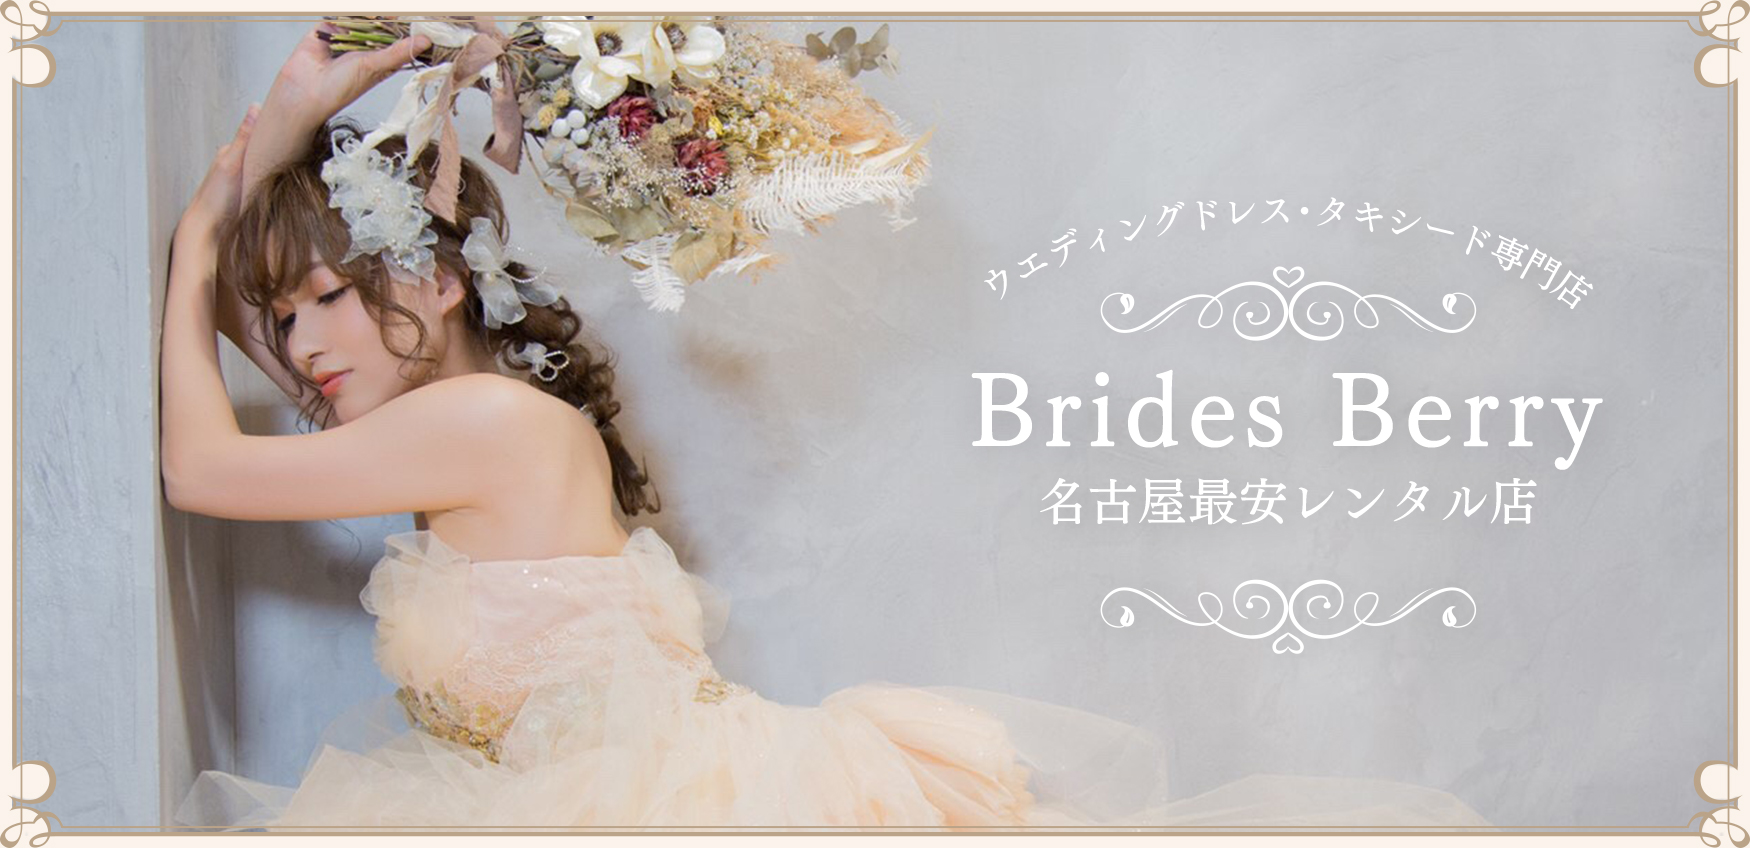 Brides Berry | Brides Berry | ウェディングドレス・カラードレスや 